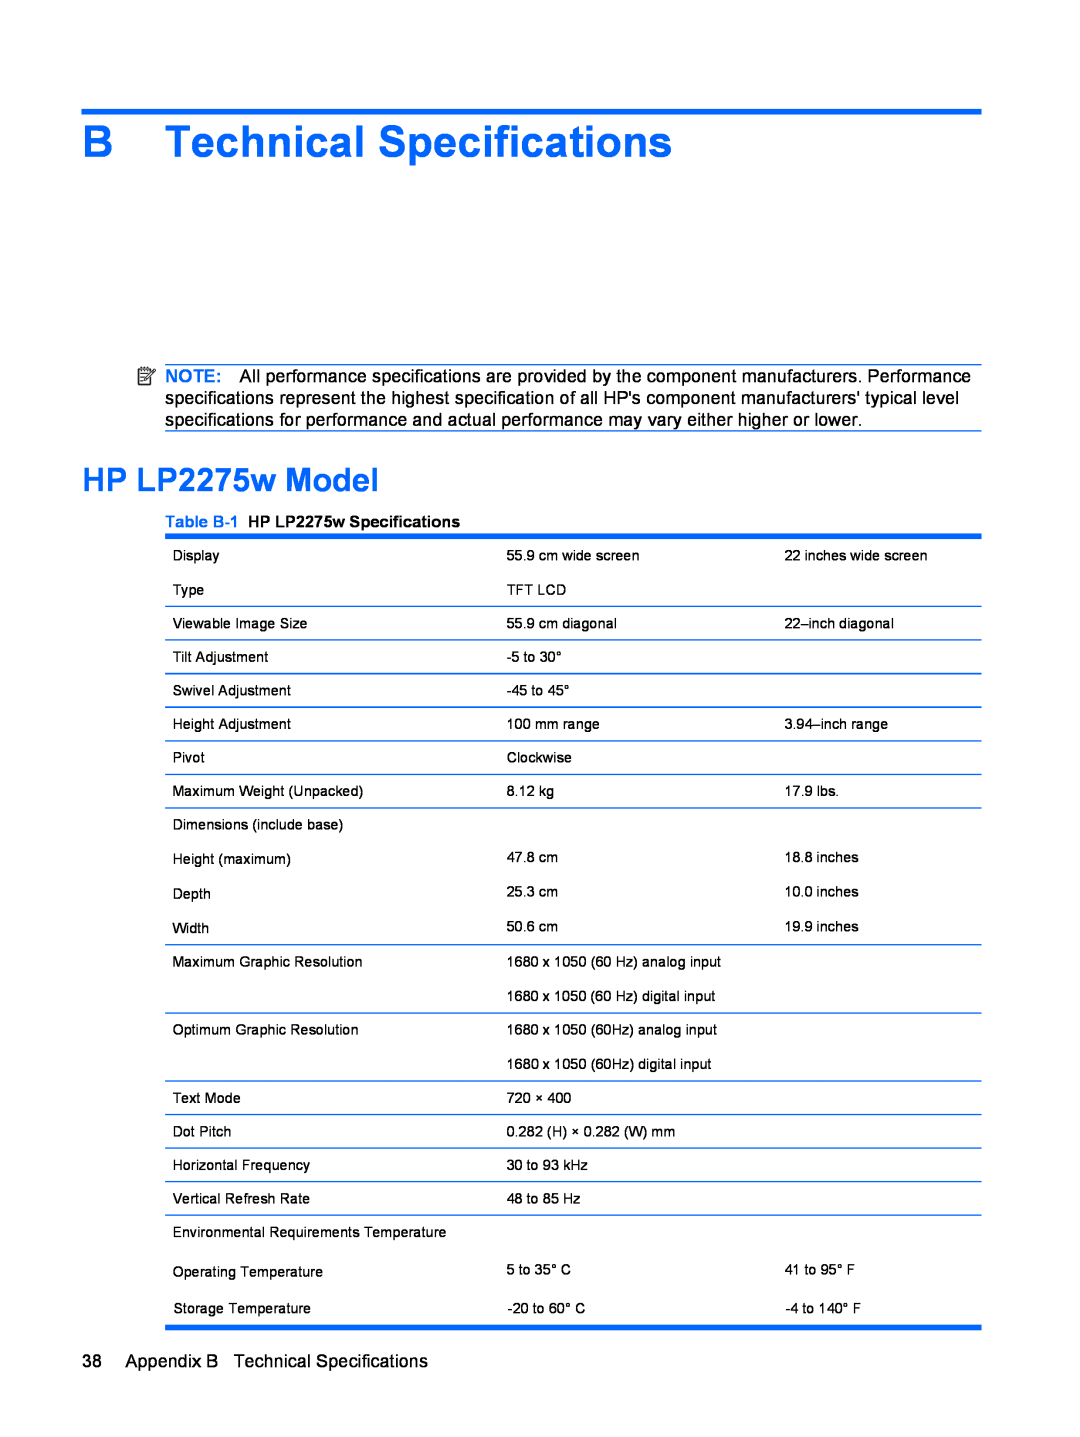 HP manual HP LP2275w Model, Appendix B Technical Specifications, Table B-1 HP LP2275w Specifications 